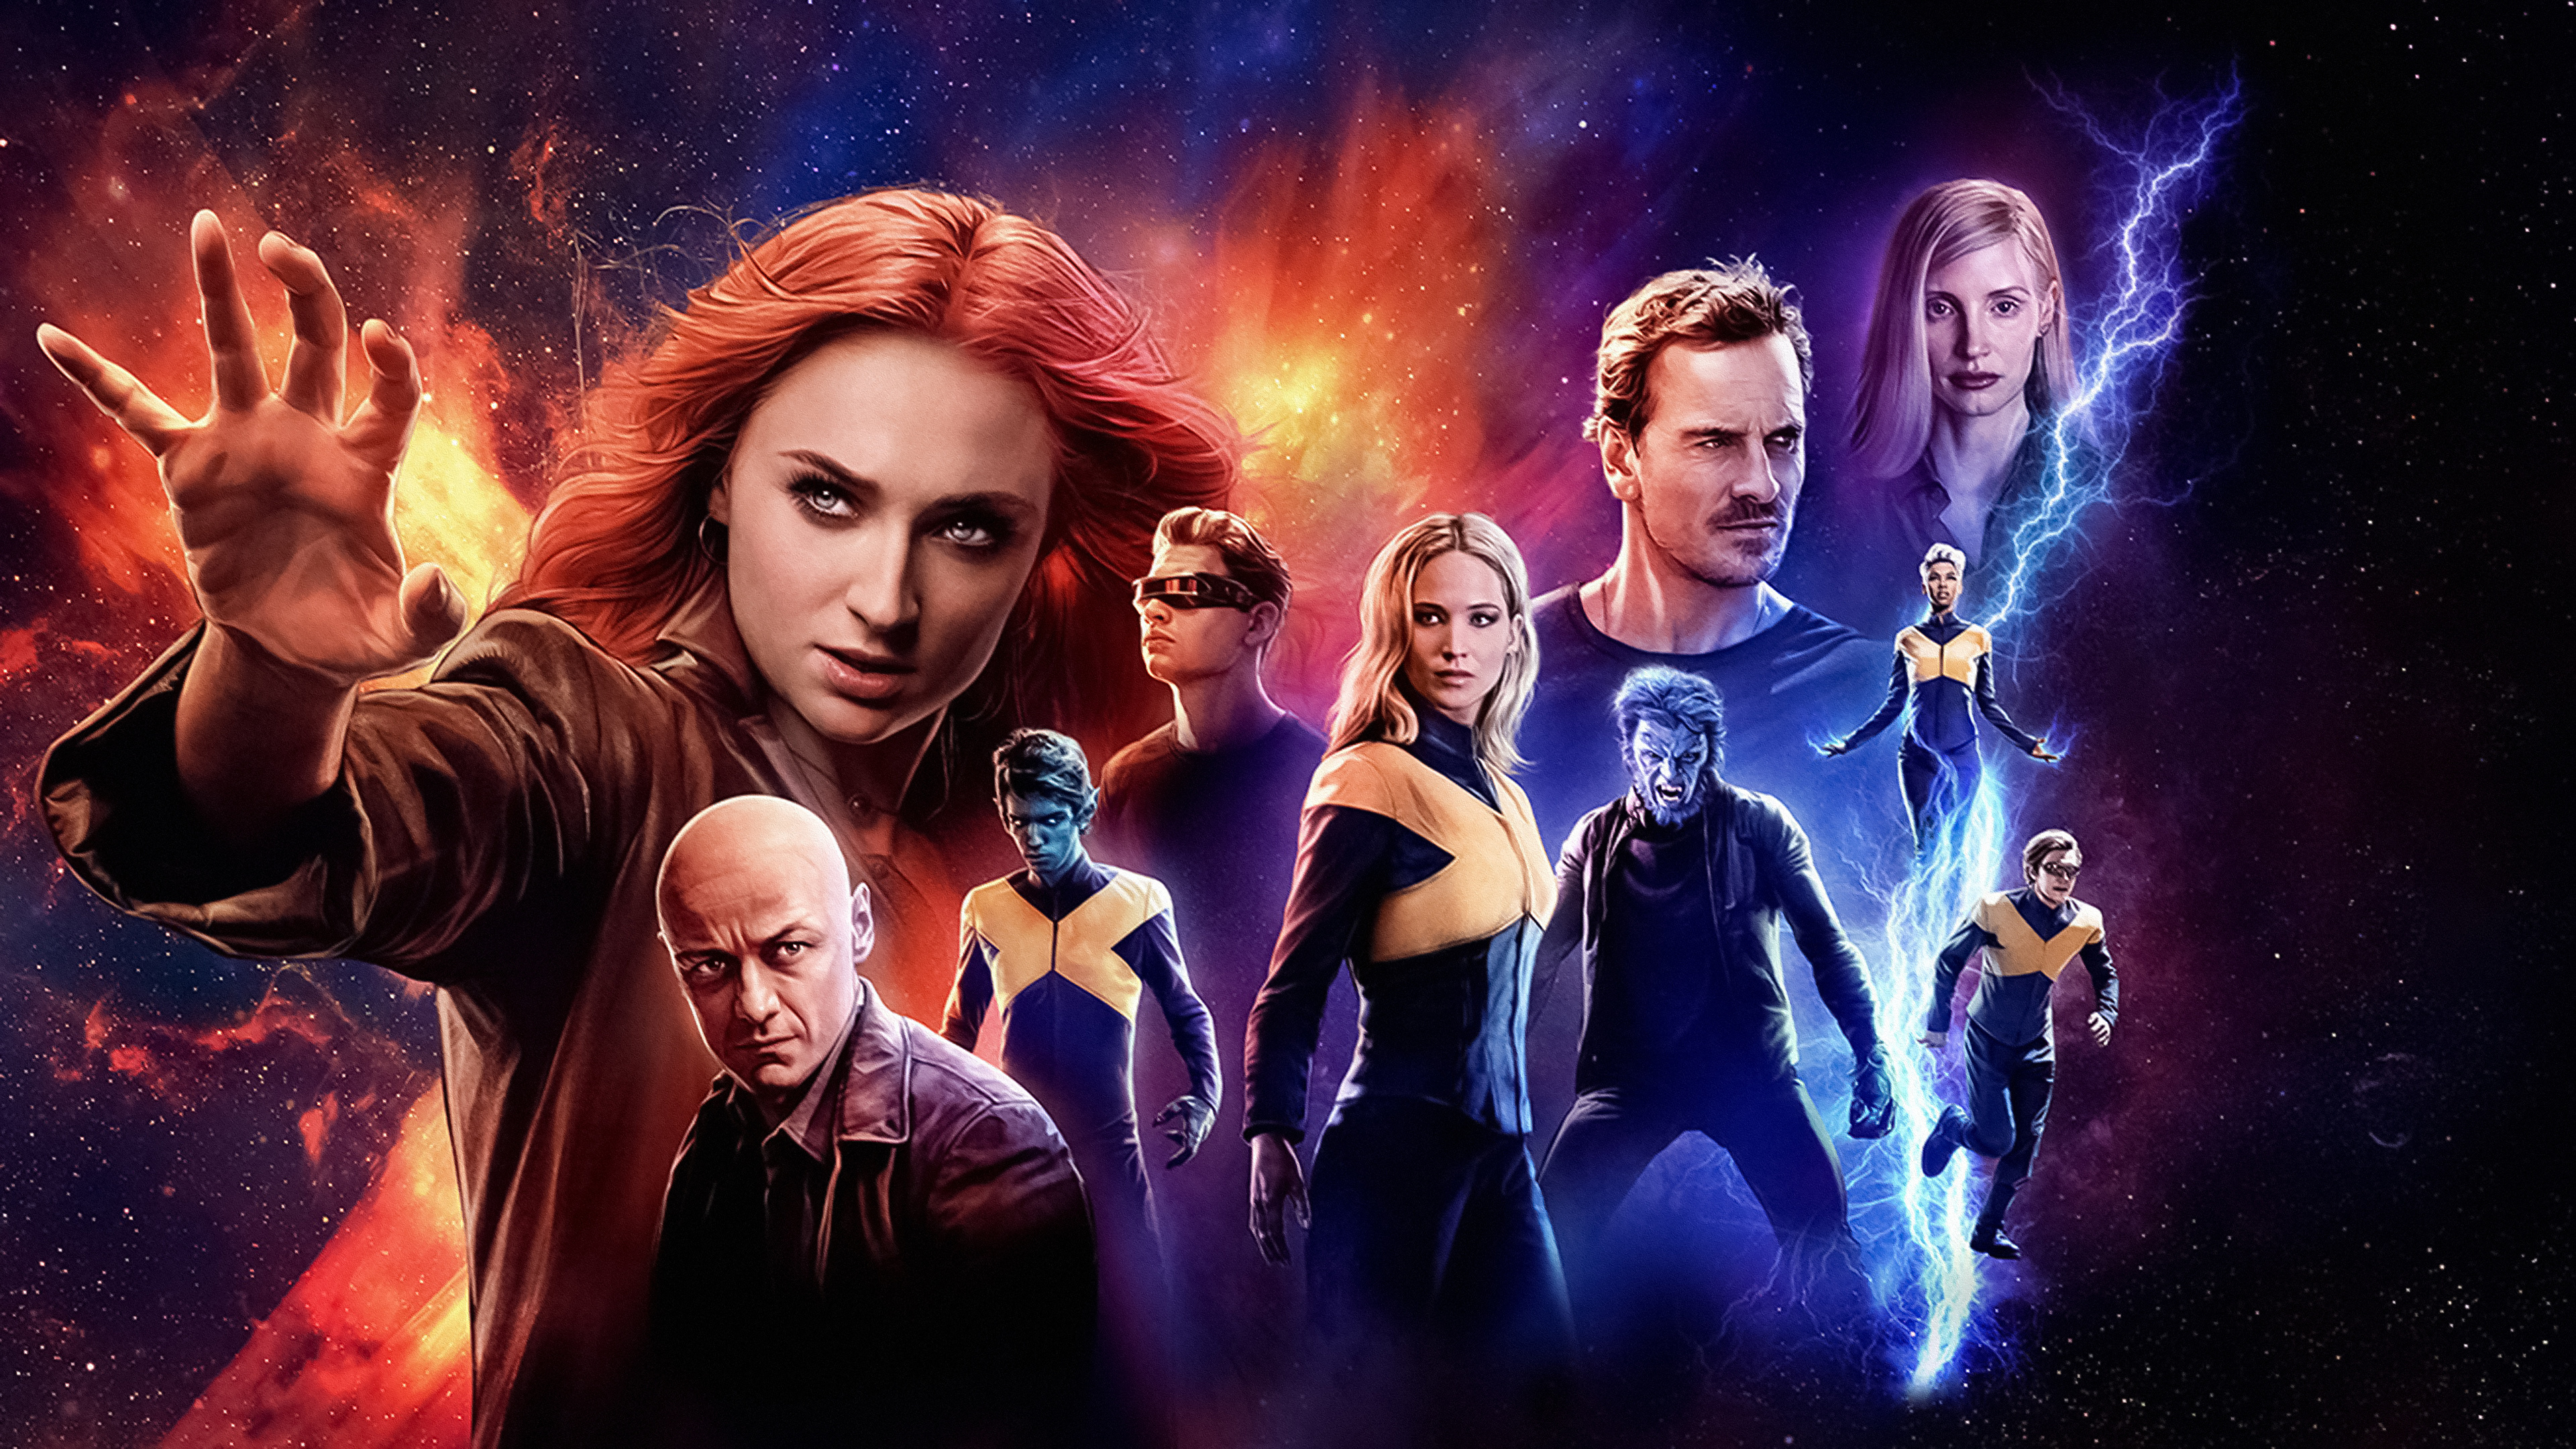 James McAvoy, Alexandra Shipp and other Marvel characters wallpaper, 3840x2160 4K Desktop